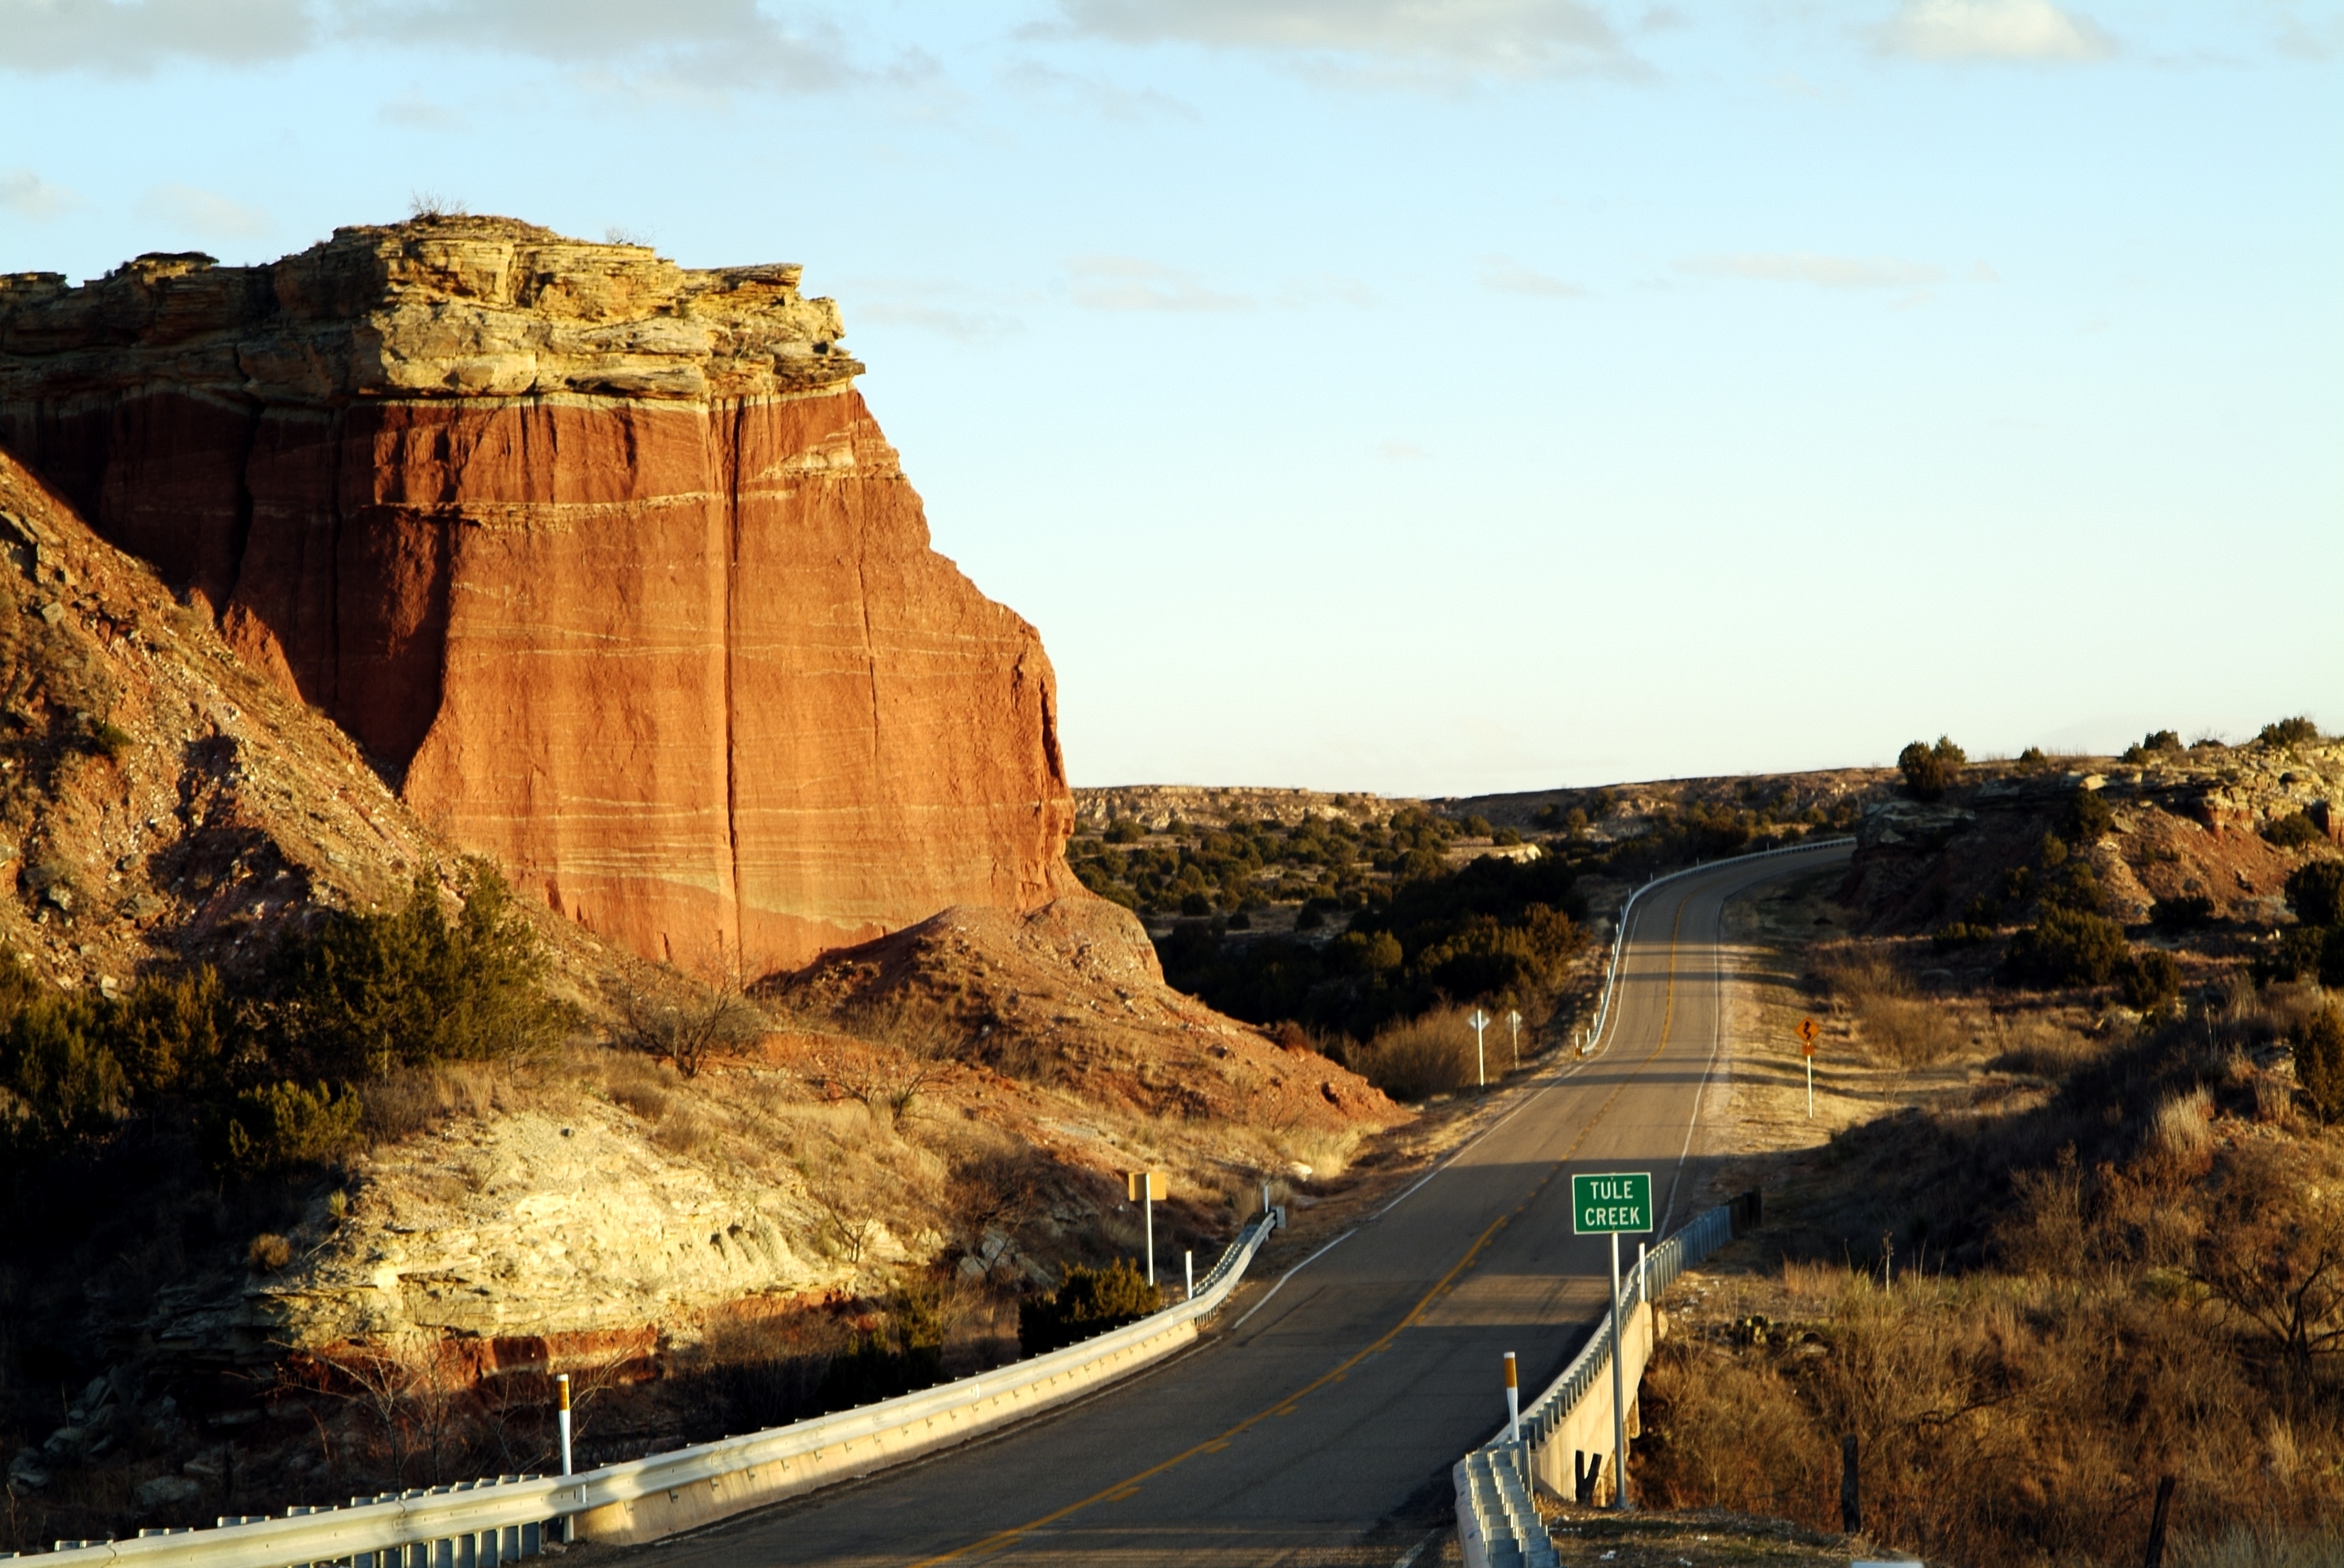 Highway through desert in Texas